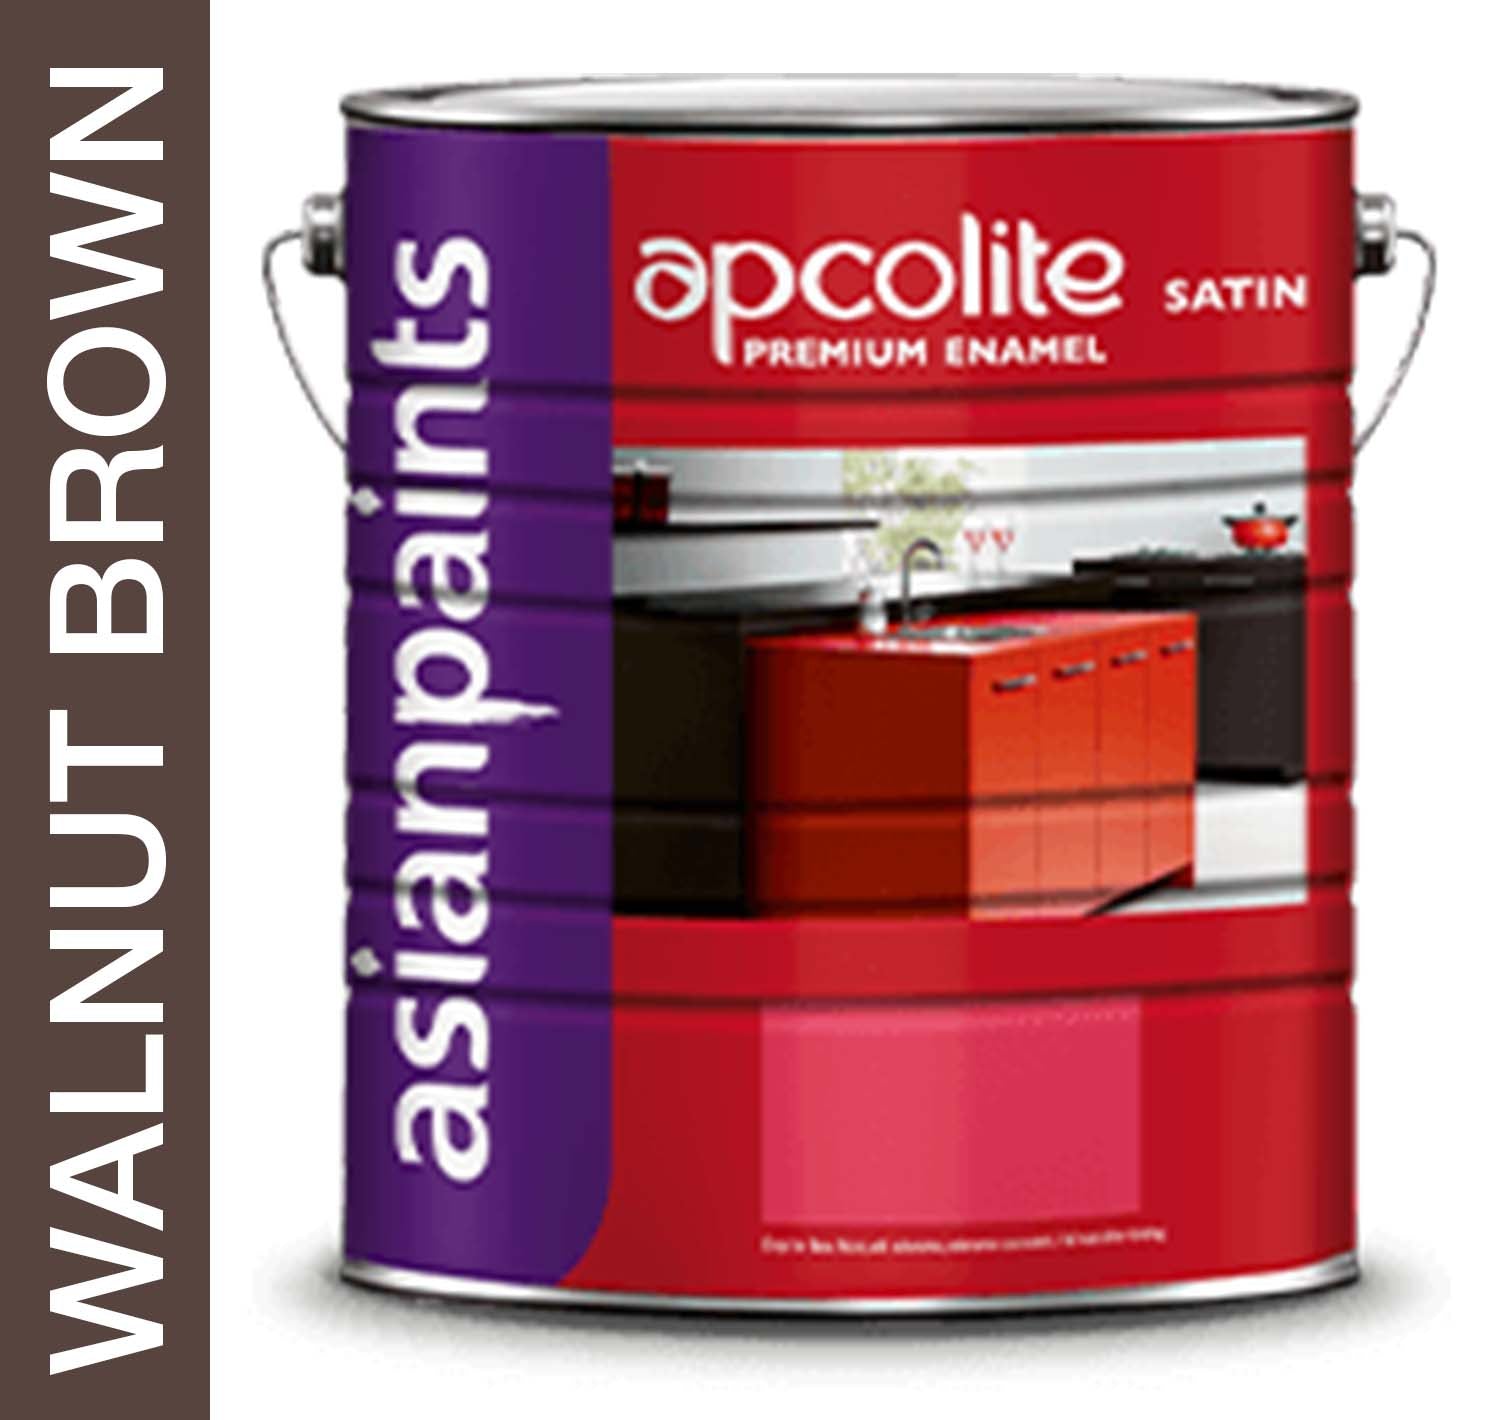 Asian Paints Apcolite Satin Premium Enamel - Walnut Brown – Badari Hardware